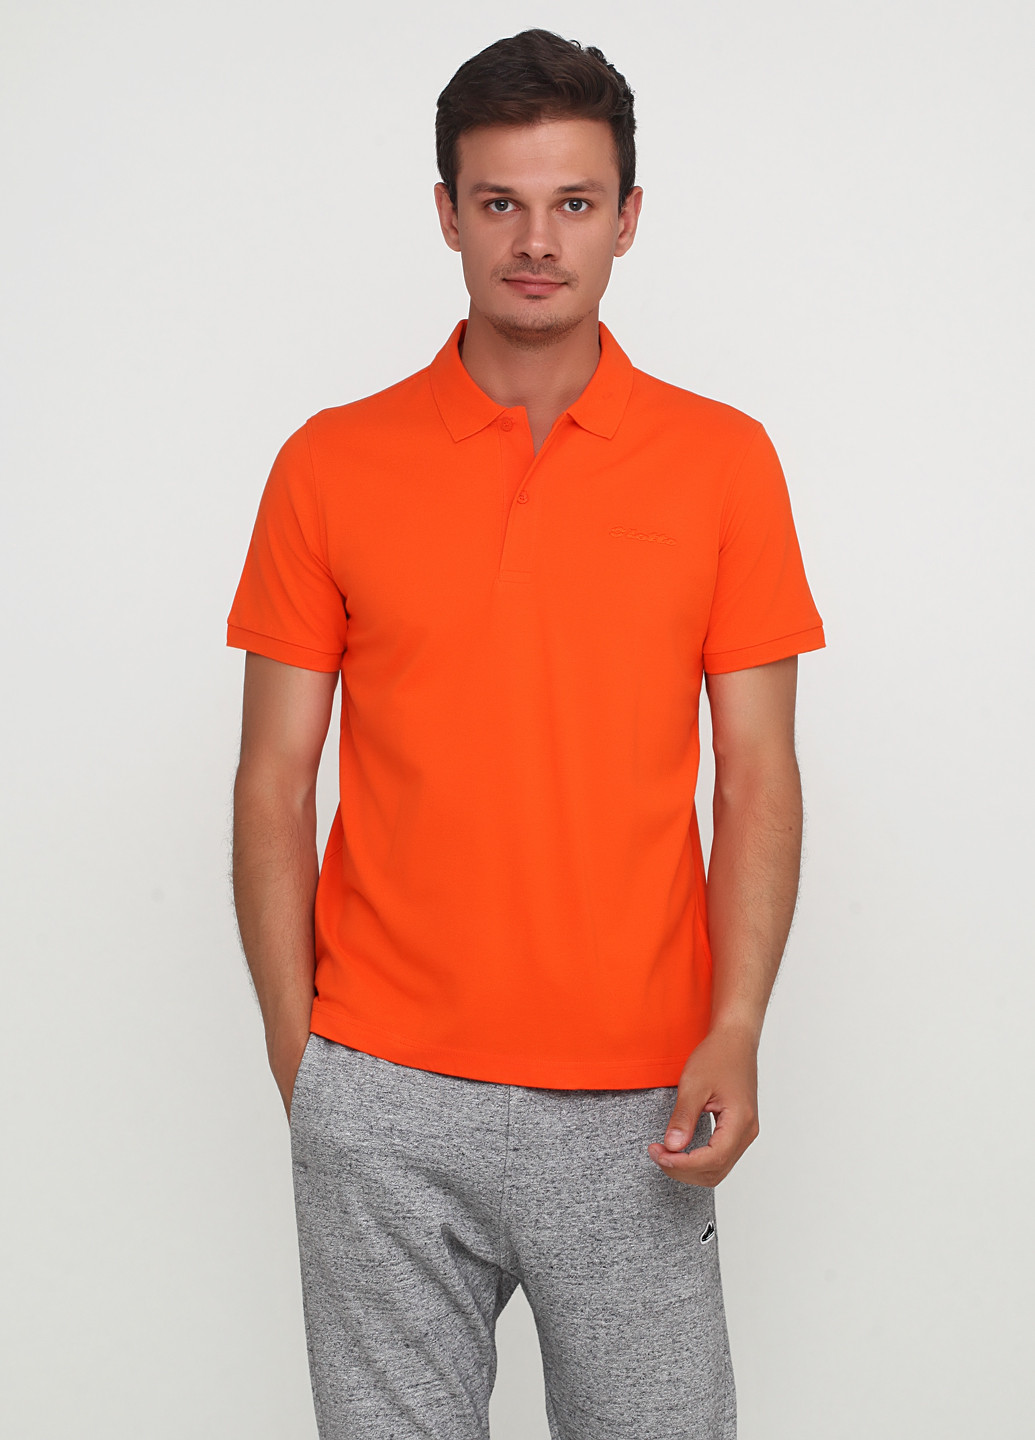 Оранжевая футболка-поло для мужчин Lotto однотонная